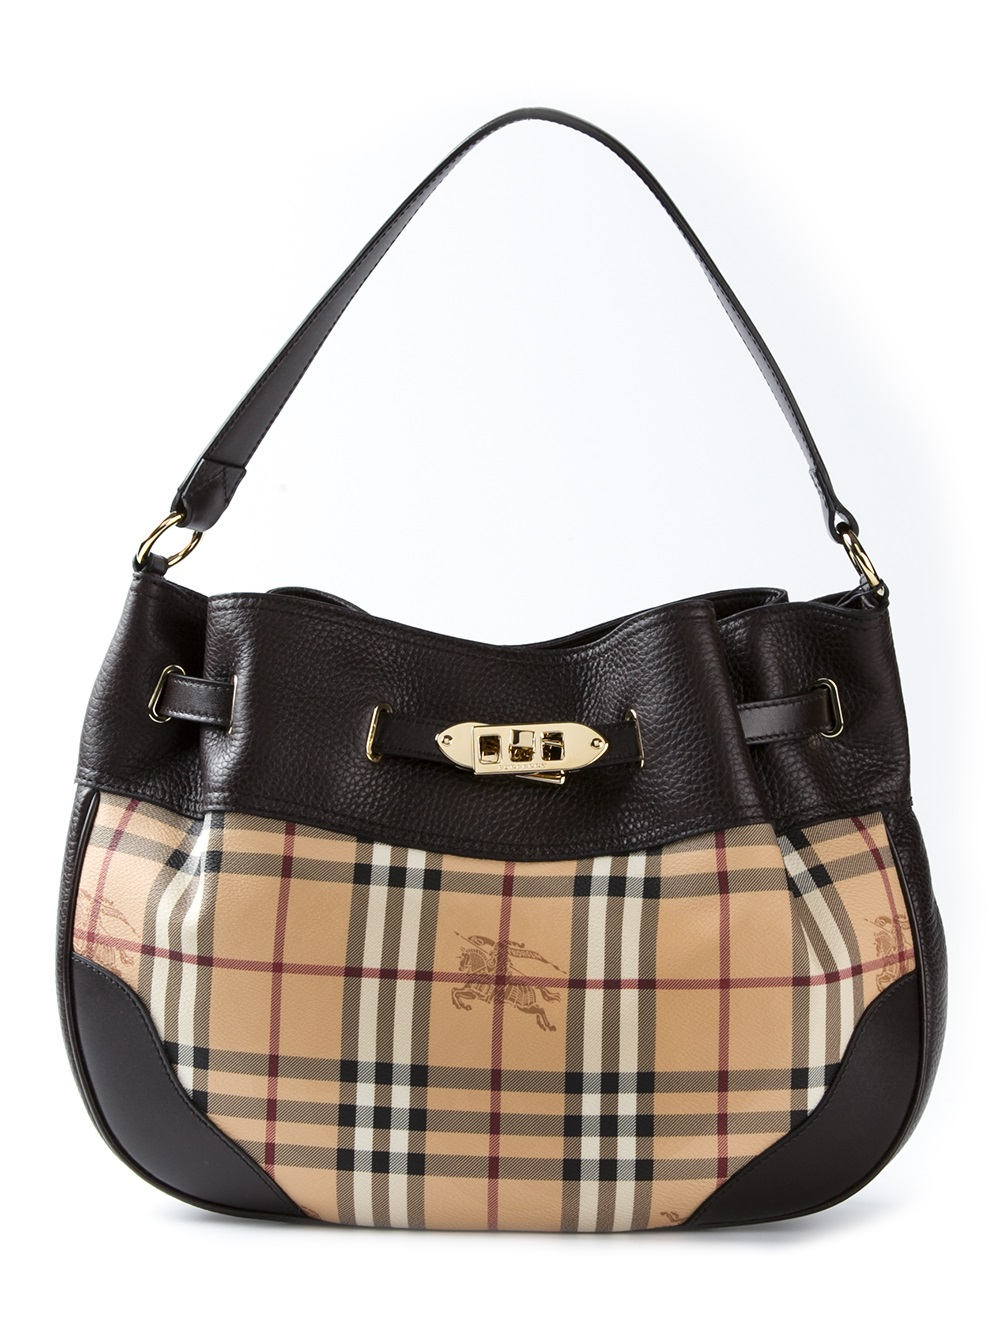 Lyst - Burberry Willenmore Shoulder Bag in Brown